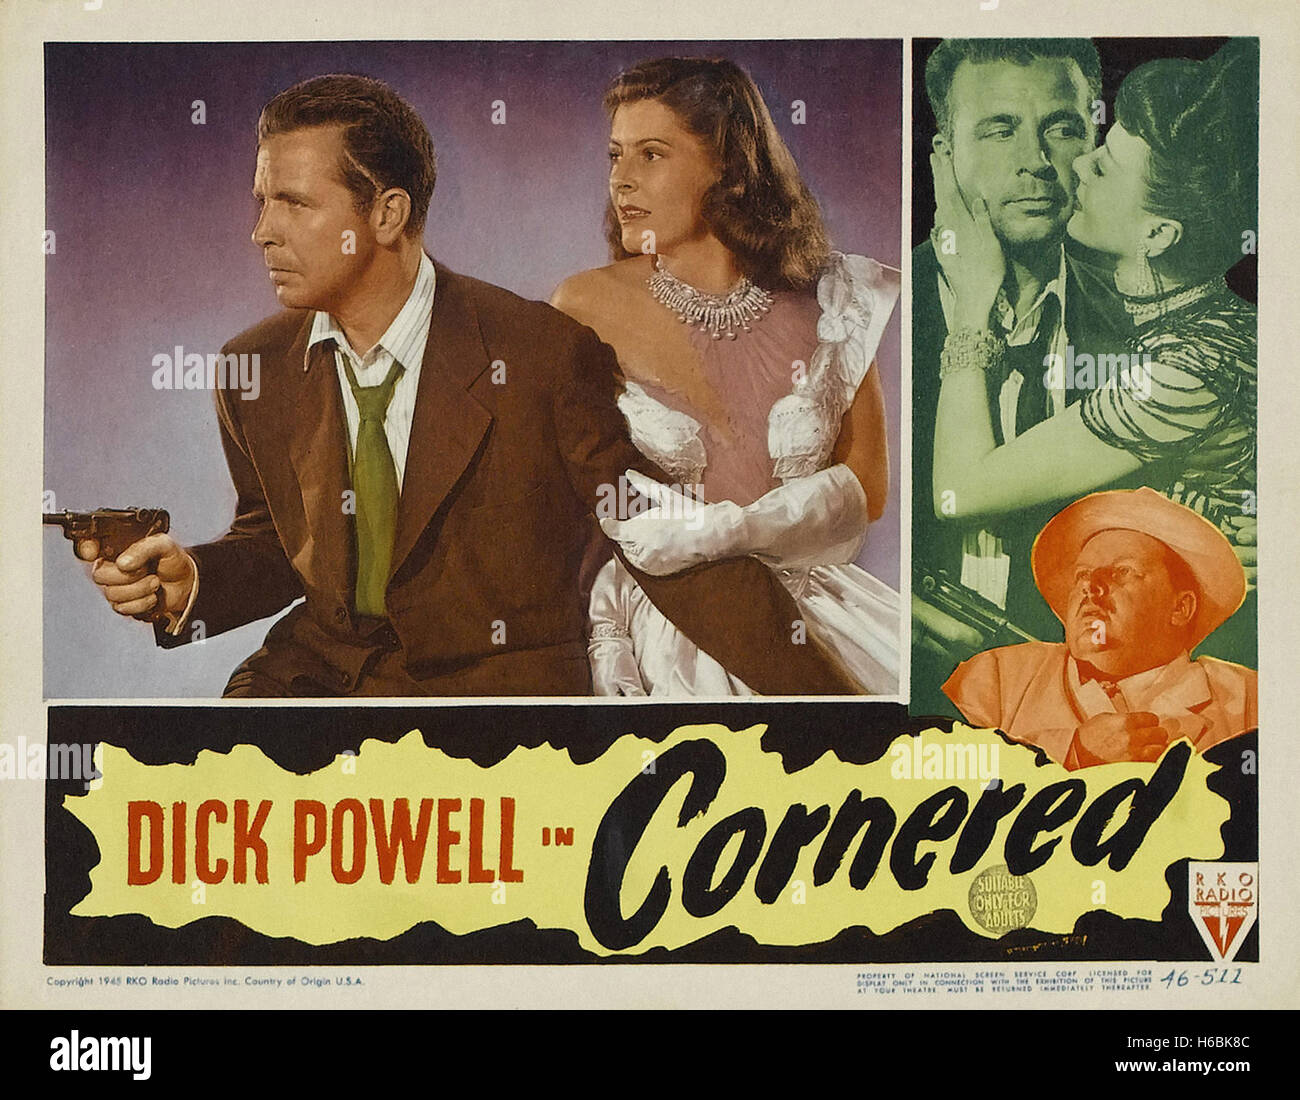 Cornered (1945)  - Movie Poster - Stock Photo